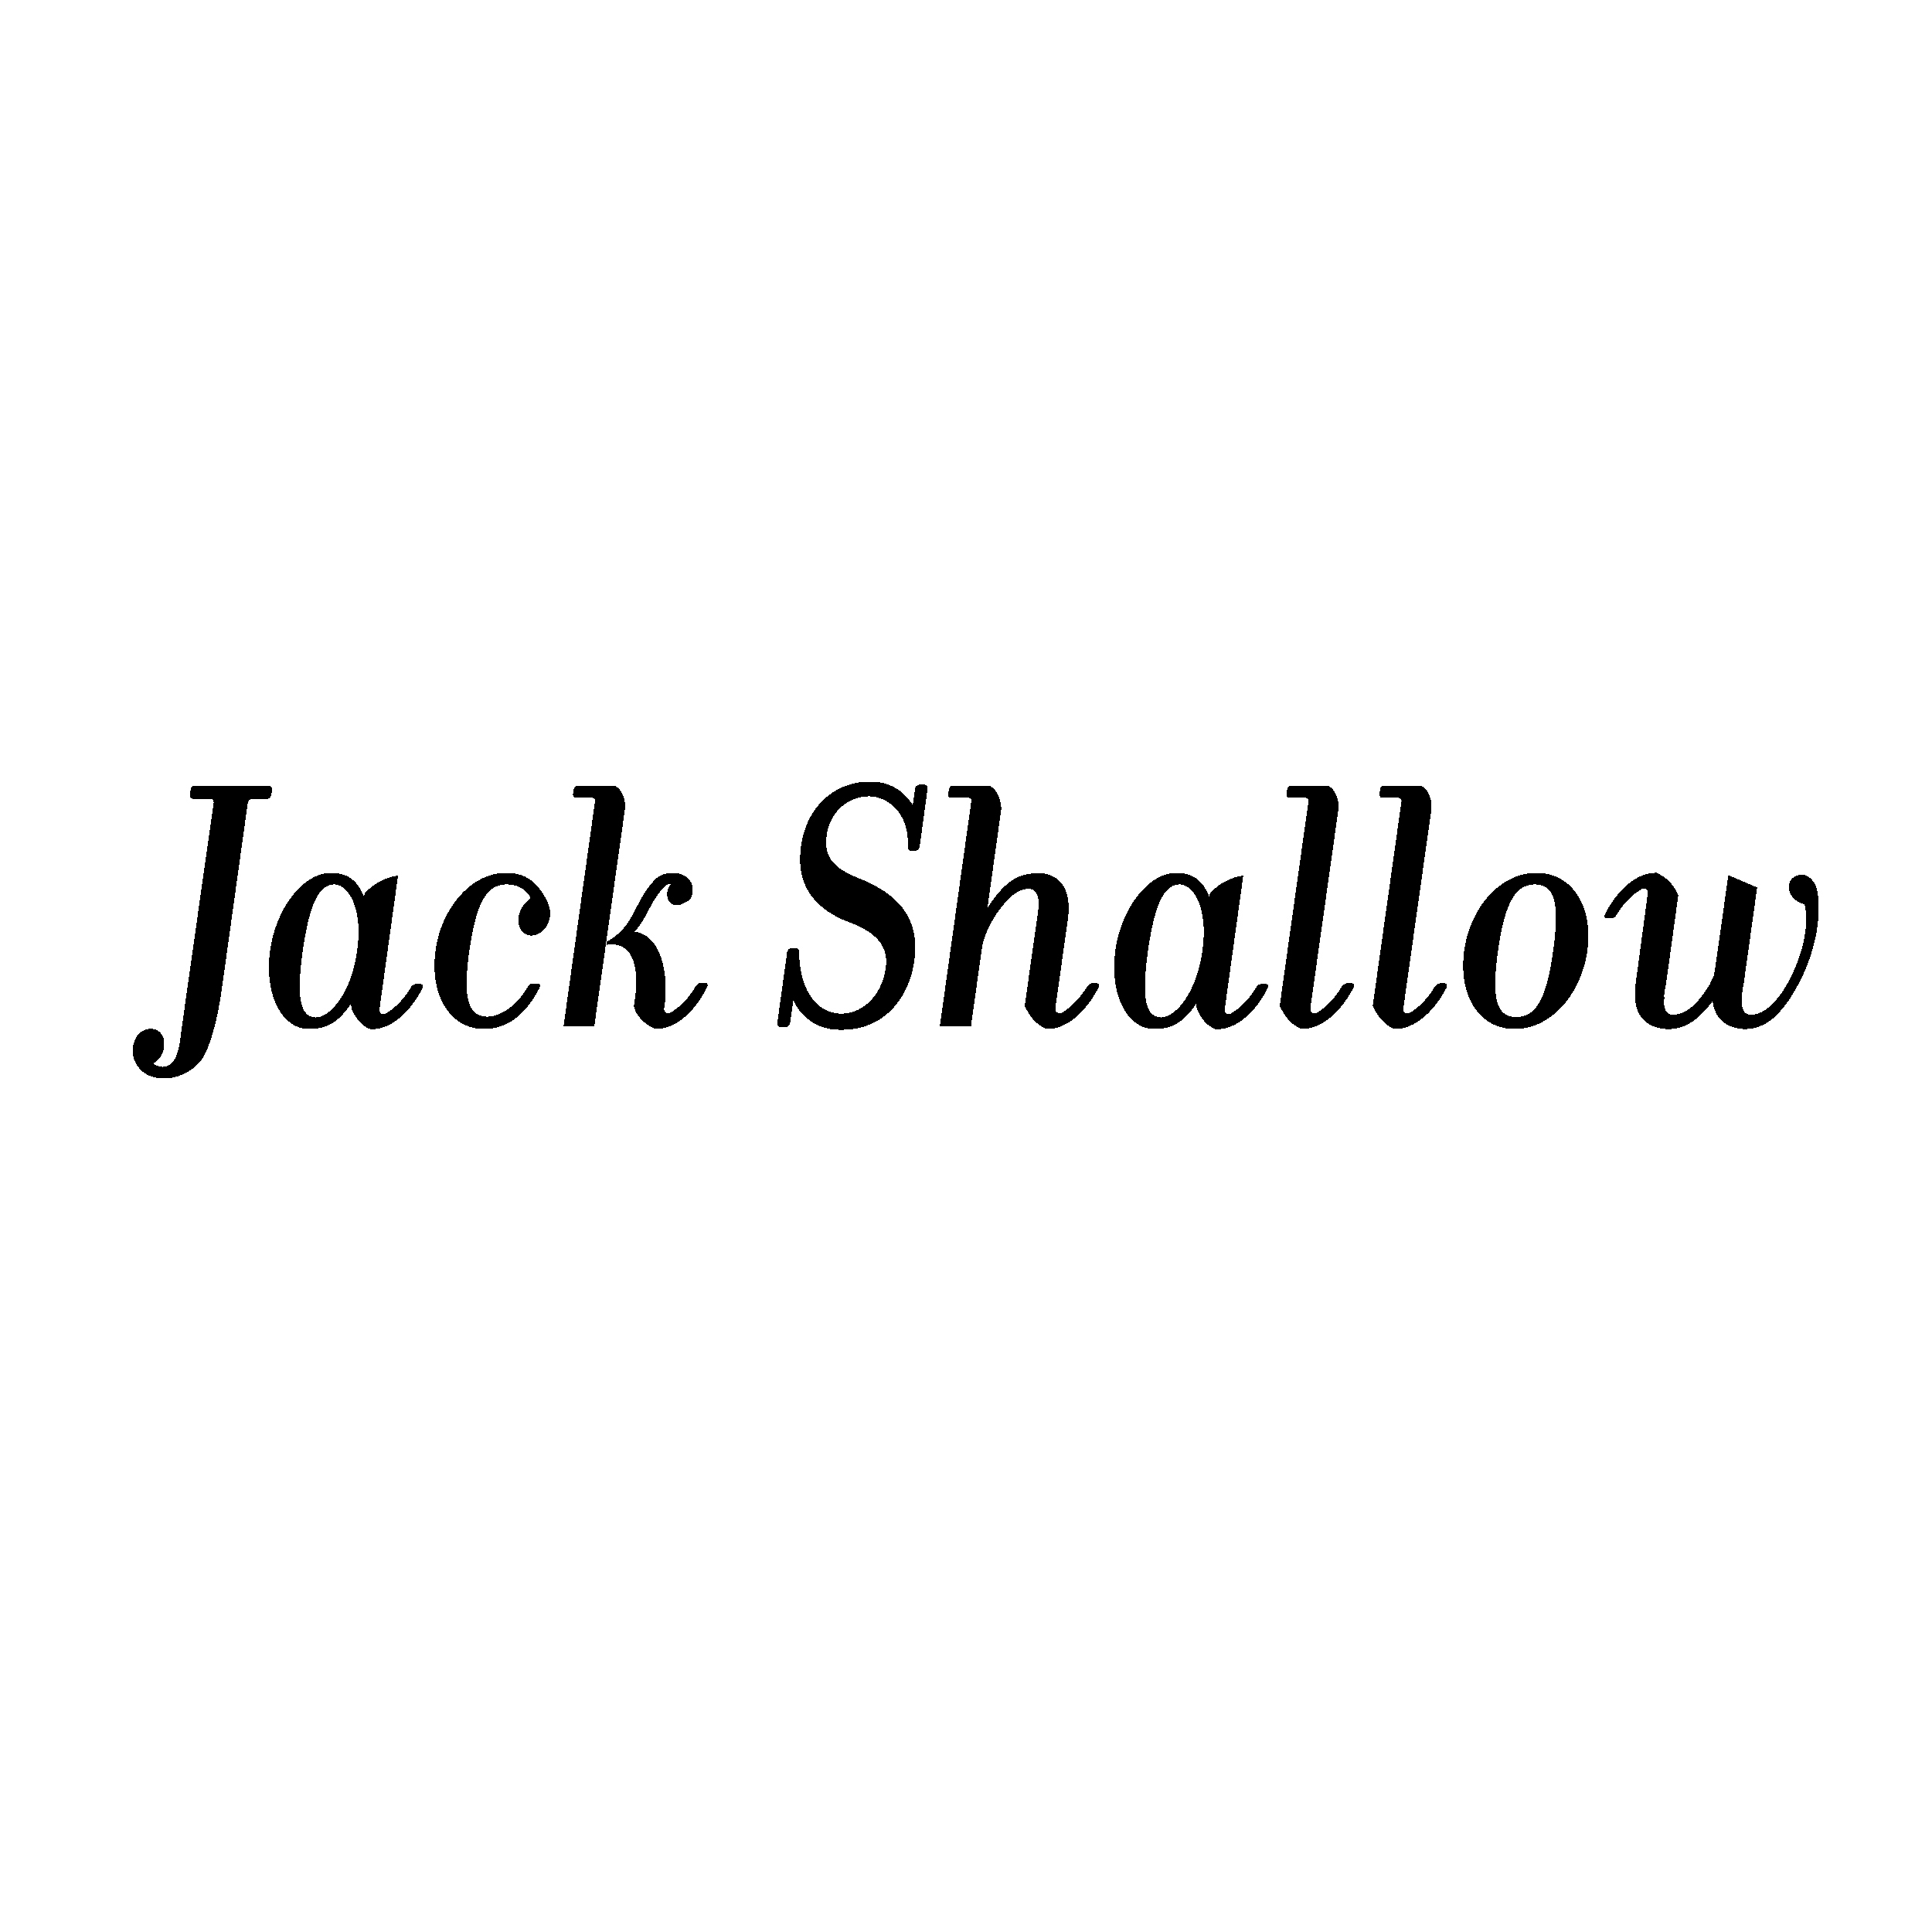 Jack Shallow